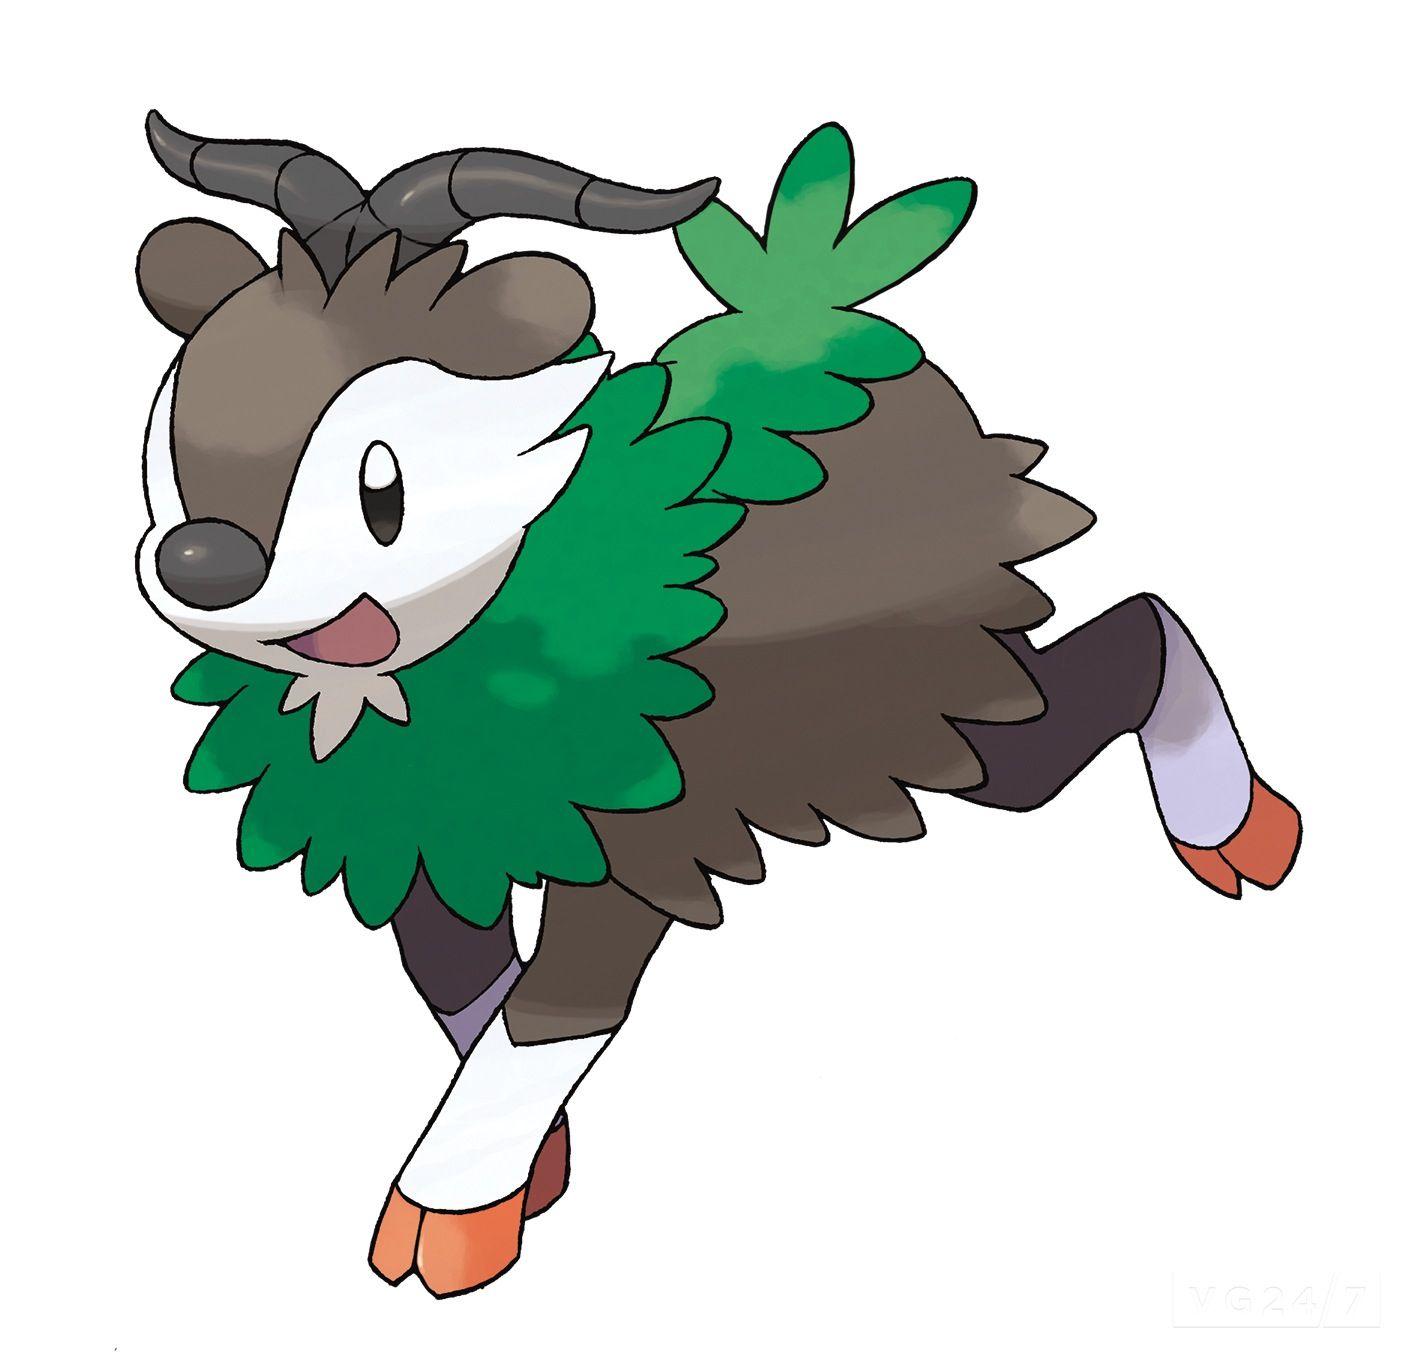 Skiddo the evolution of Go goat from Pokemon X and Y. Pokemon